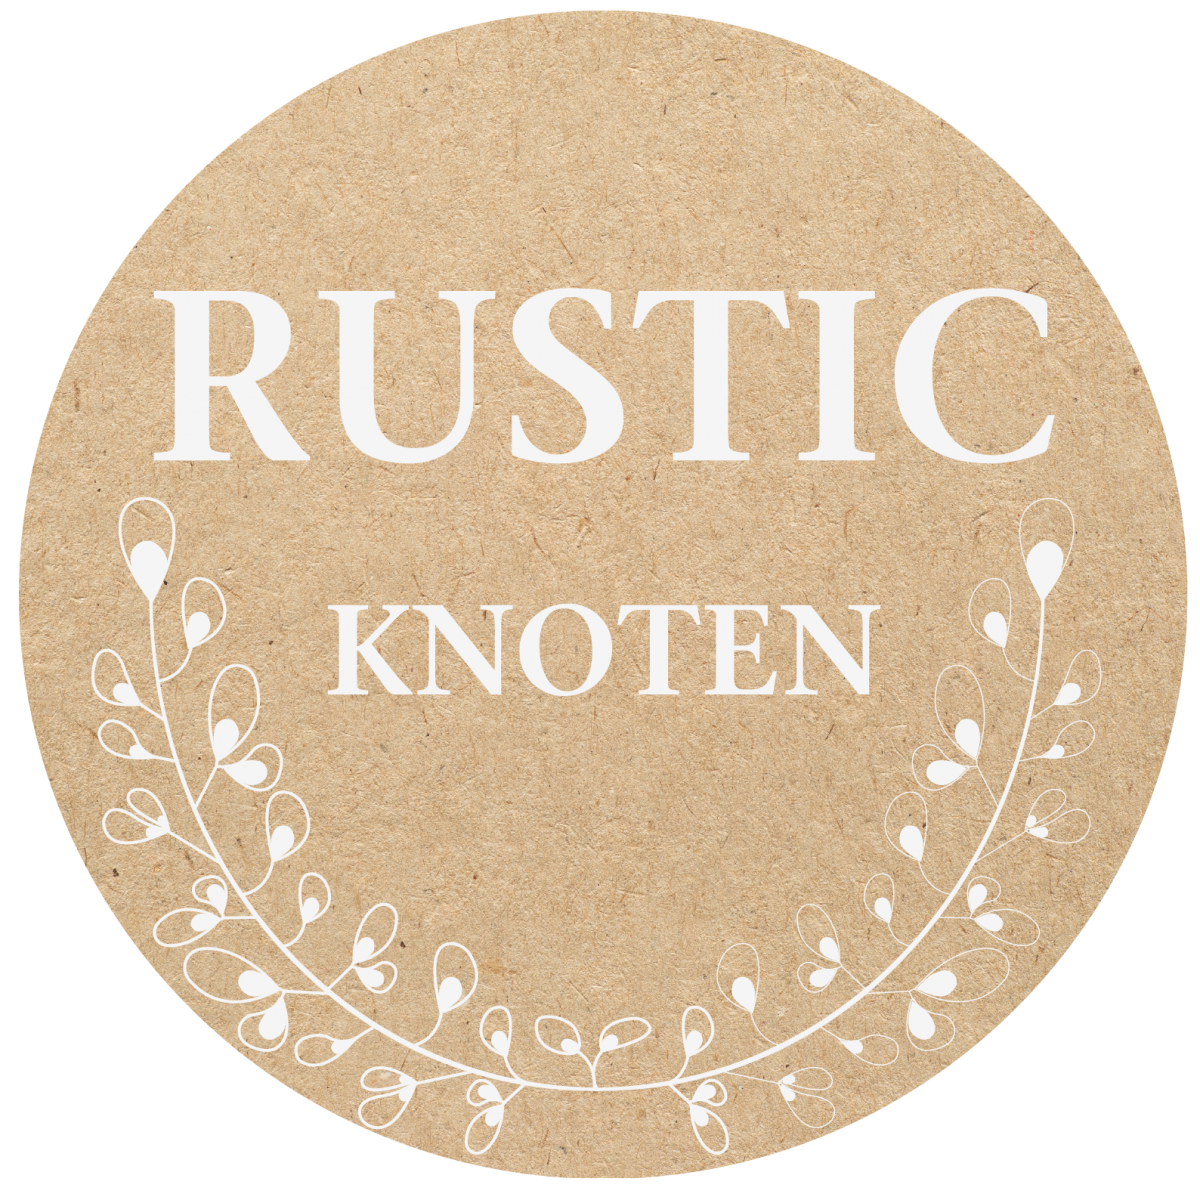 Rustic Knoten